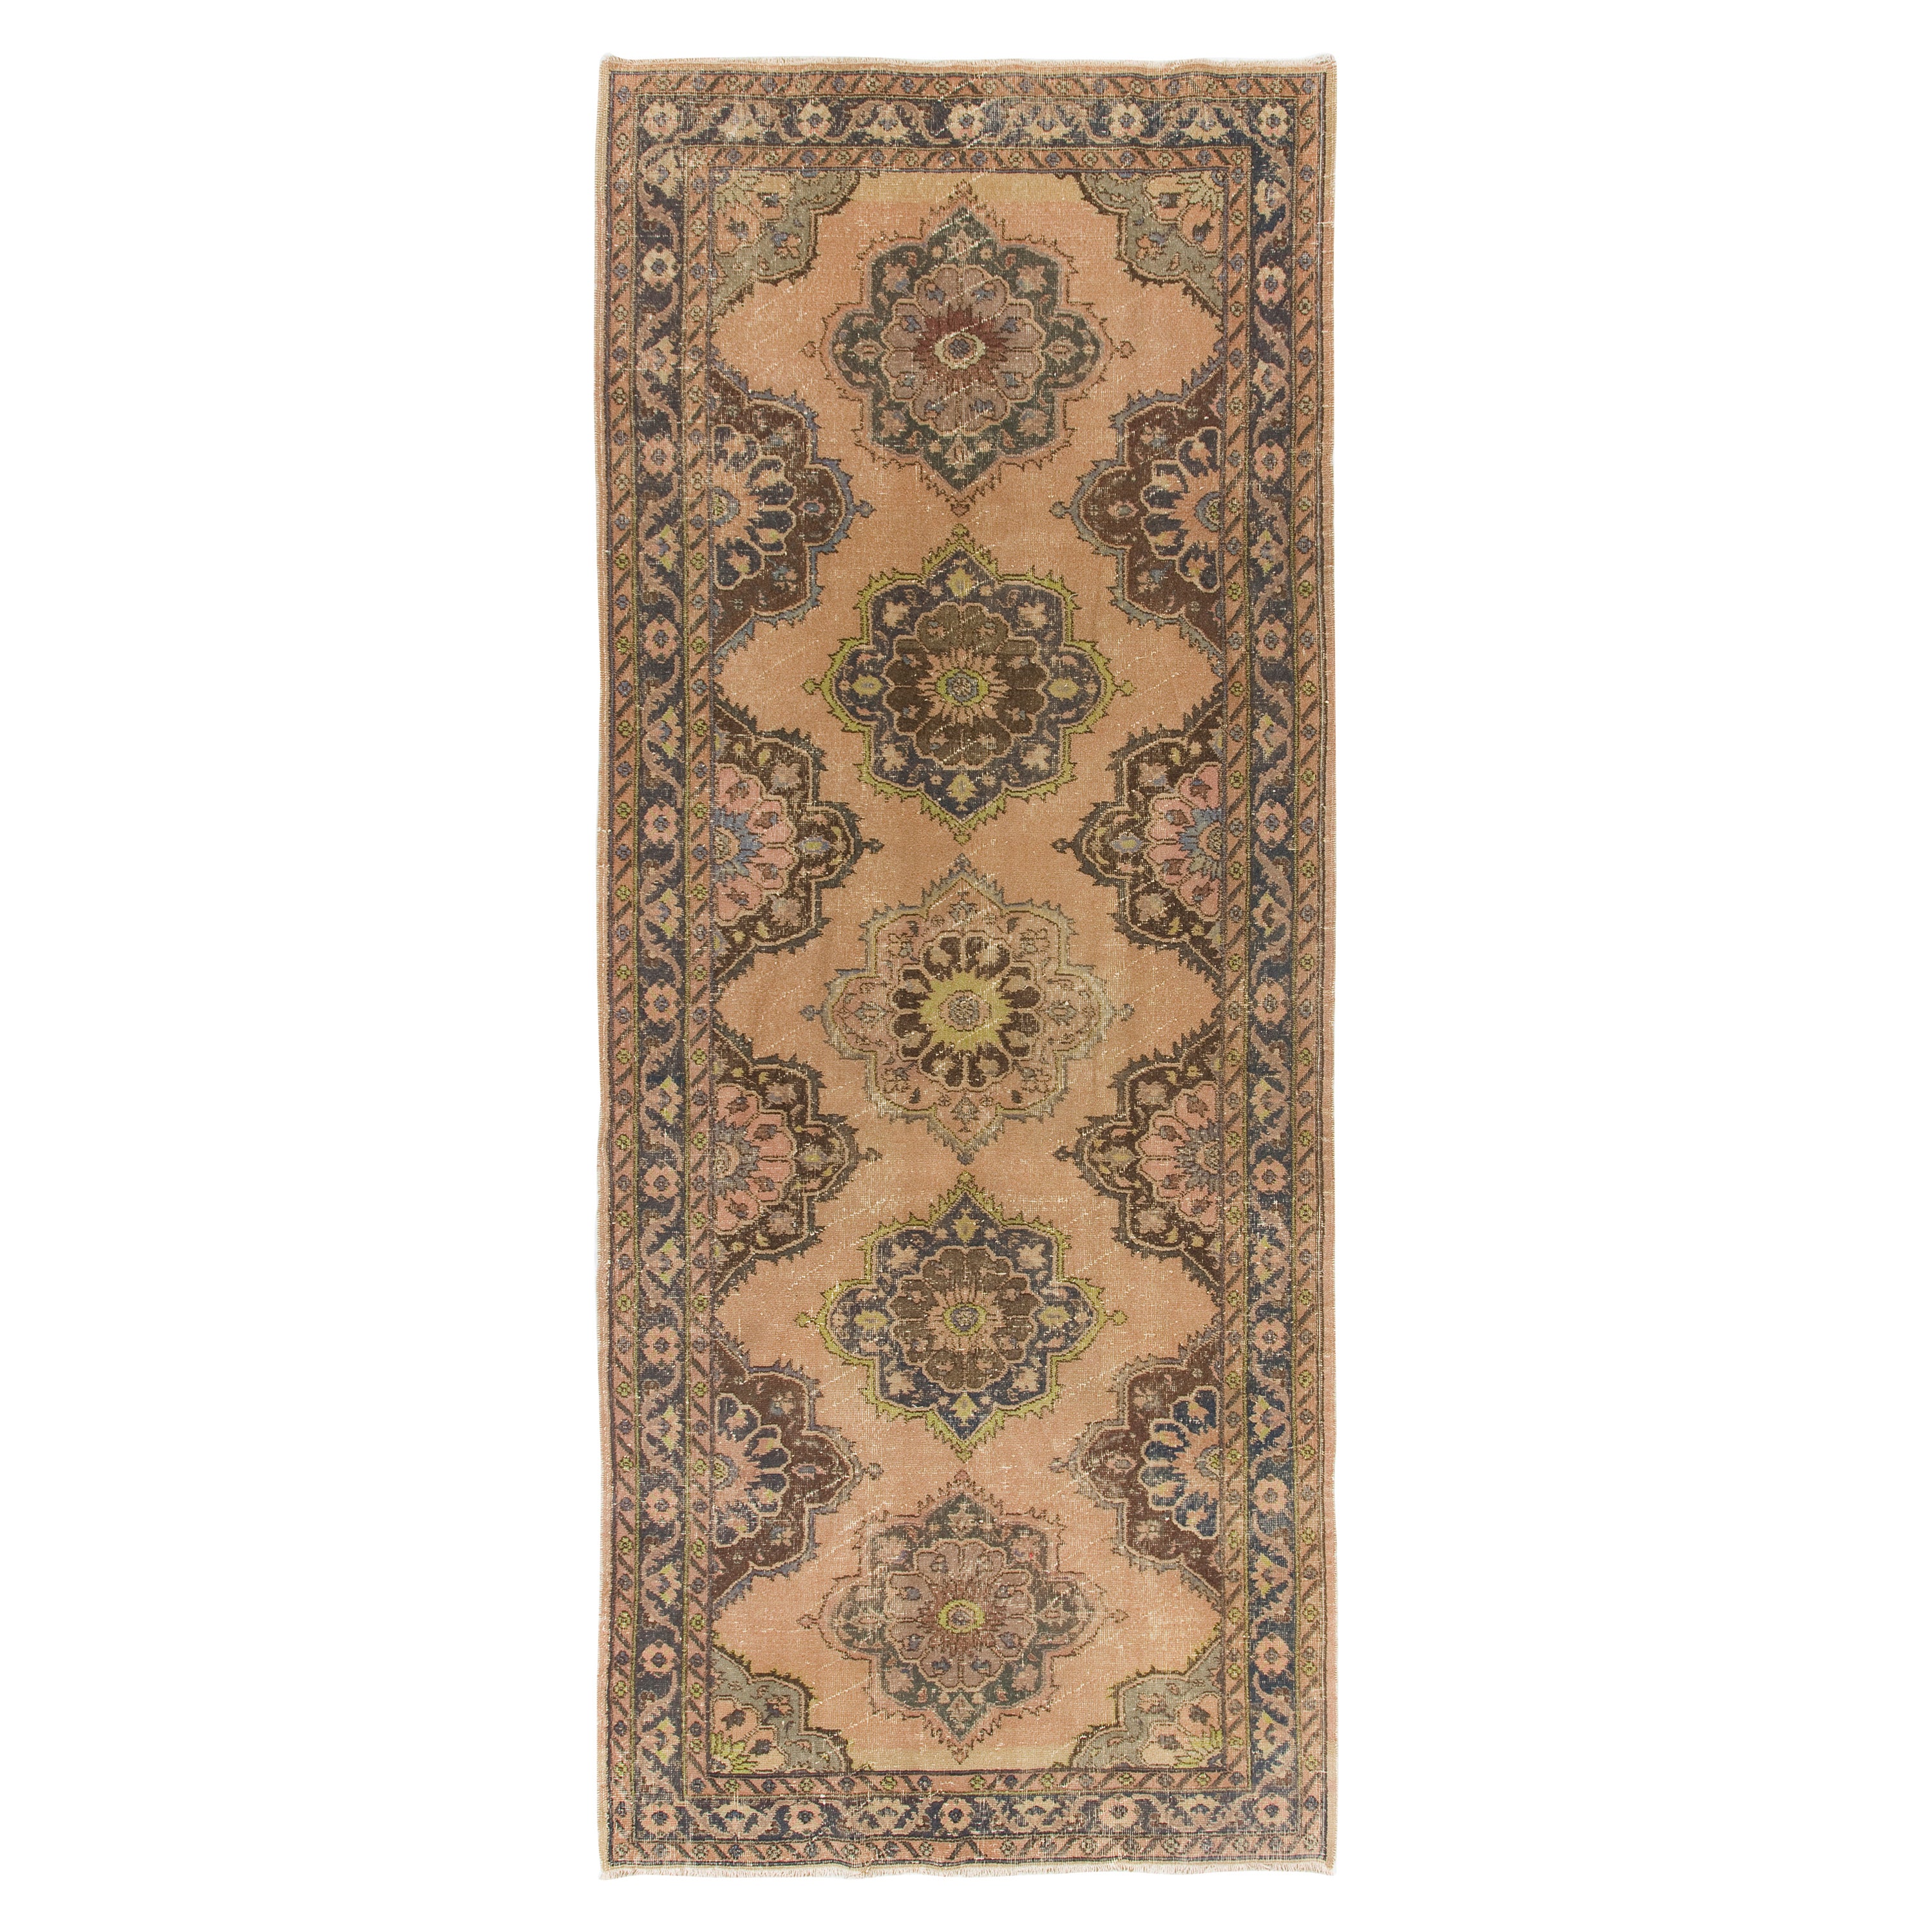 5x12.2 Ft Vintage Oushak Runner Rug in Beige, Handmade Turkish Corridor Carpet (tapis de couloir turc fait à la main)